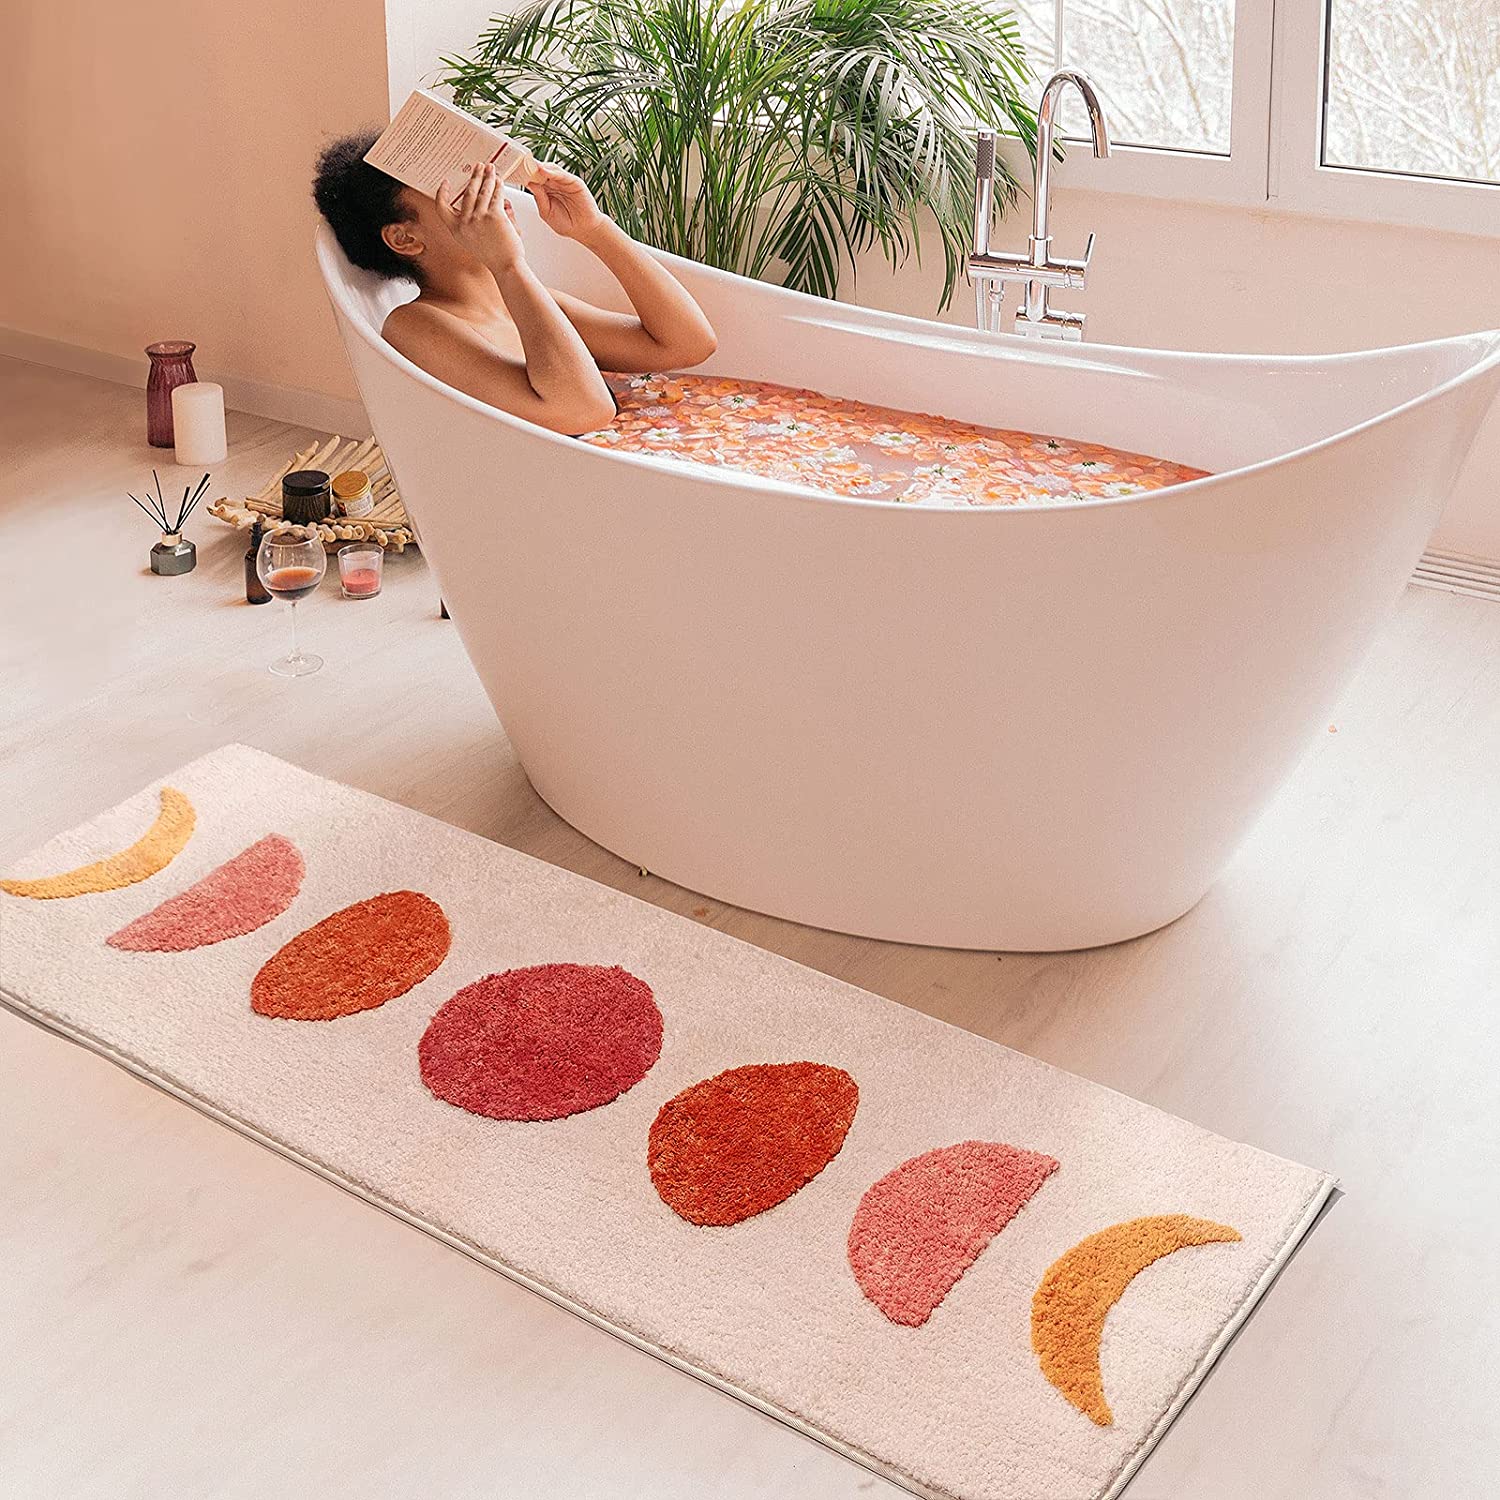 Feblilac Pink Moon Phase Runner Mat for Bedroom Bathroom